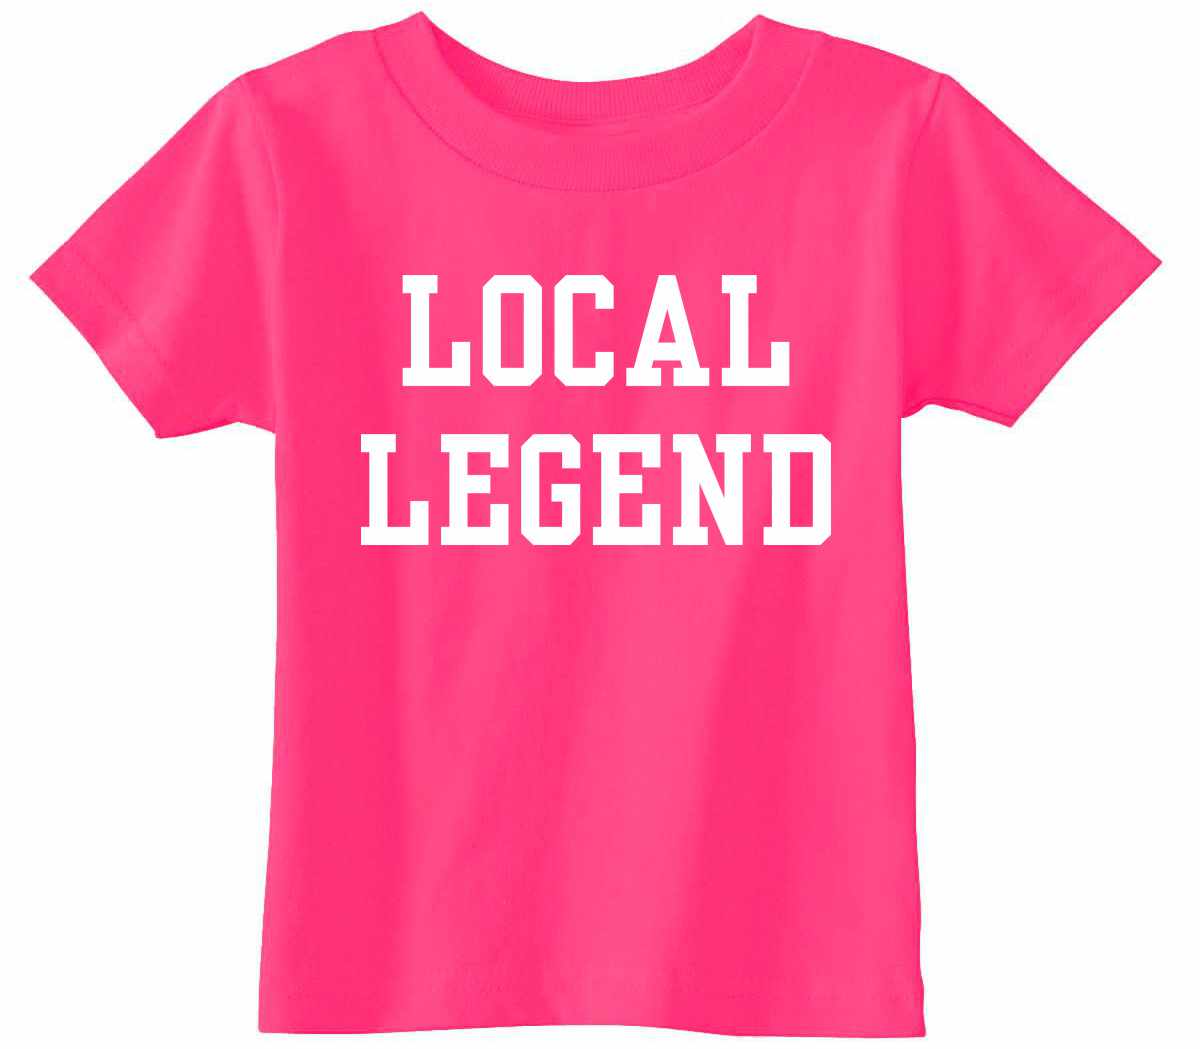 Local Legend on Infant-Toddler T-Shirt (#1310-7)